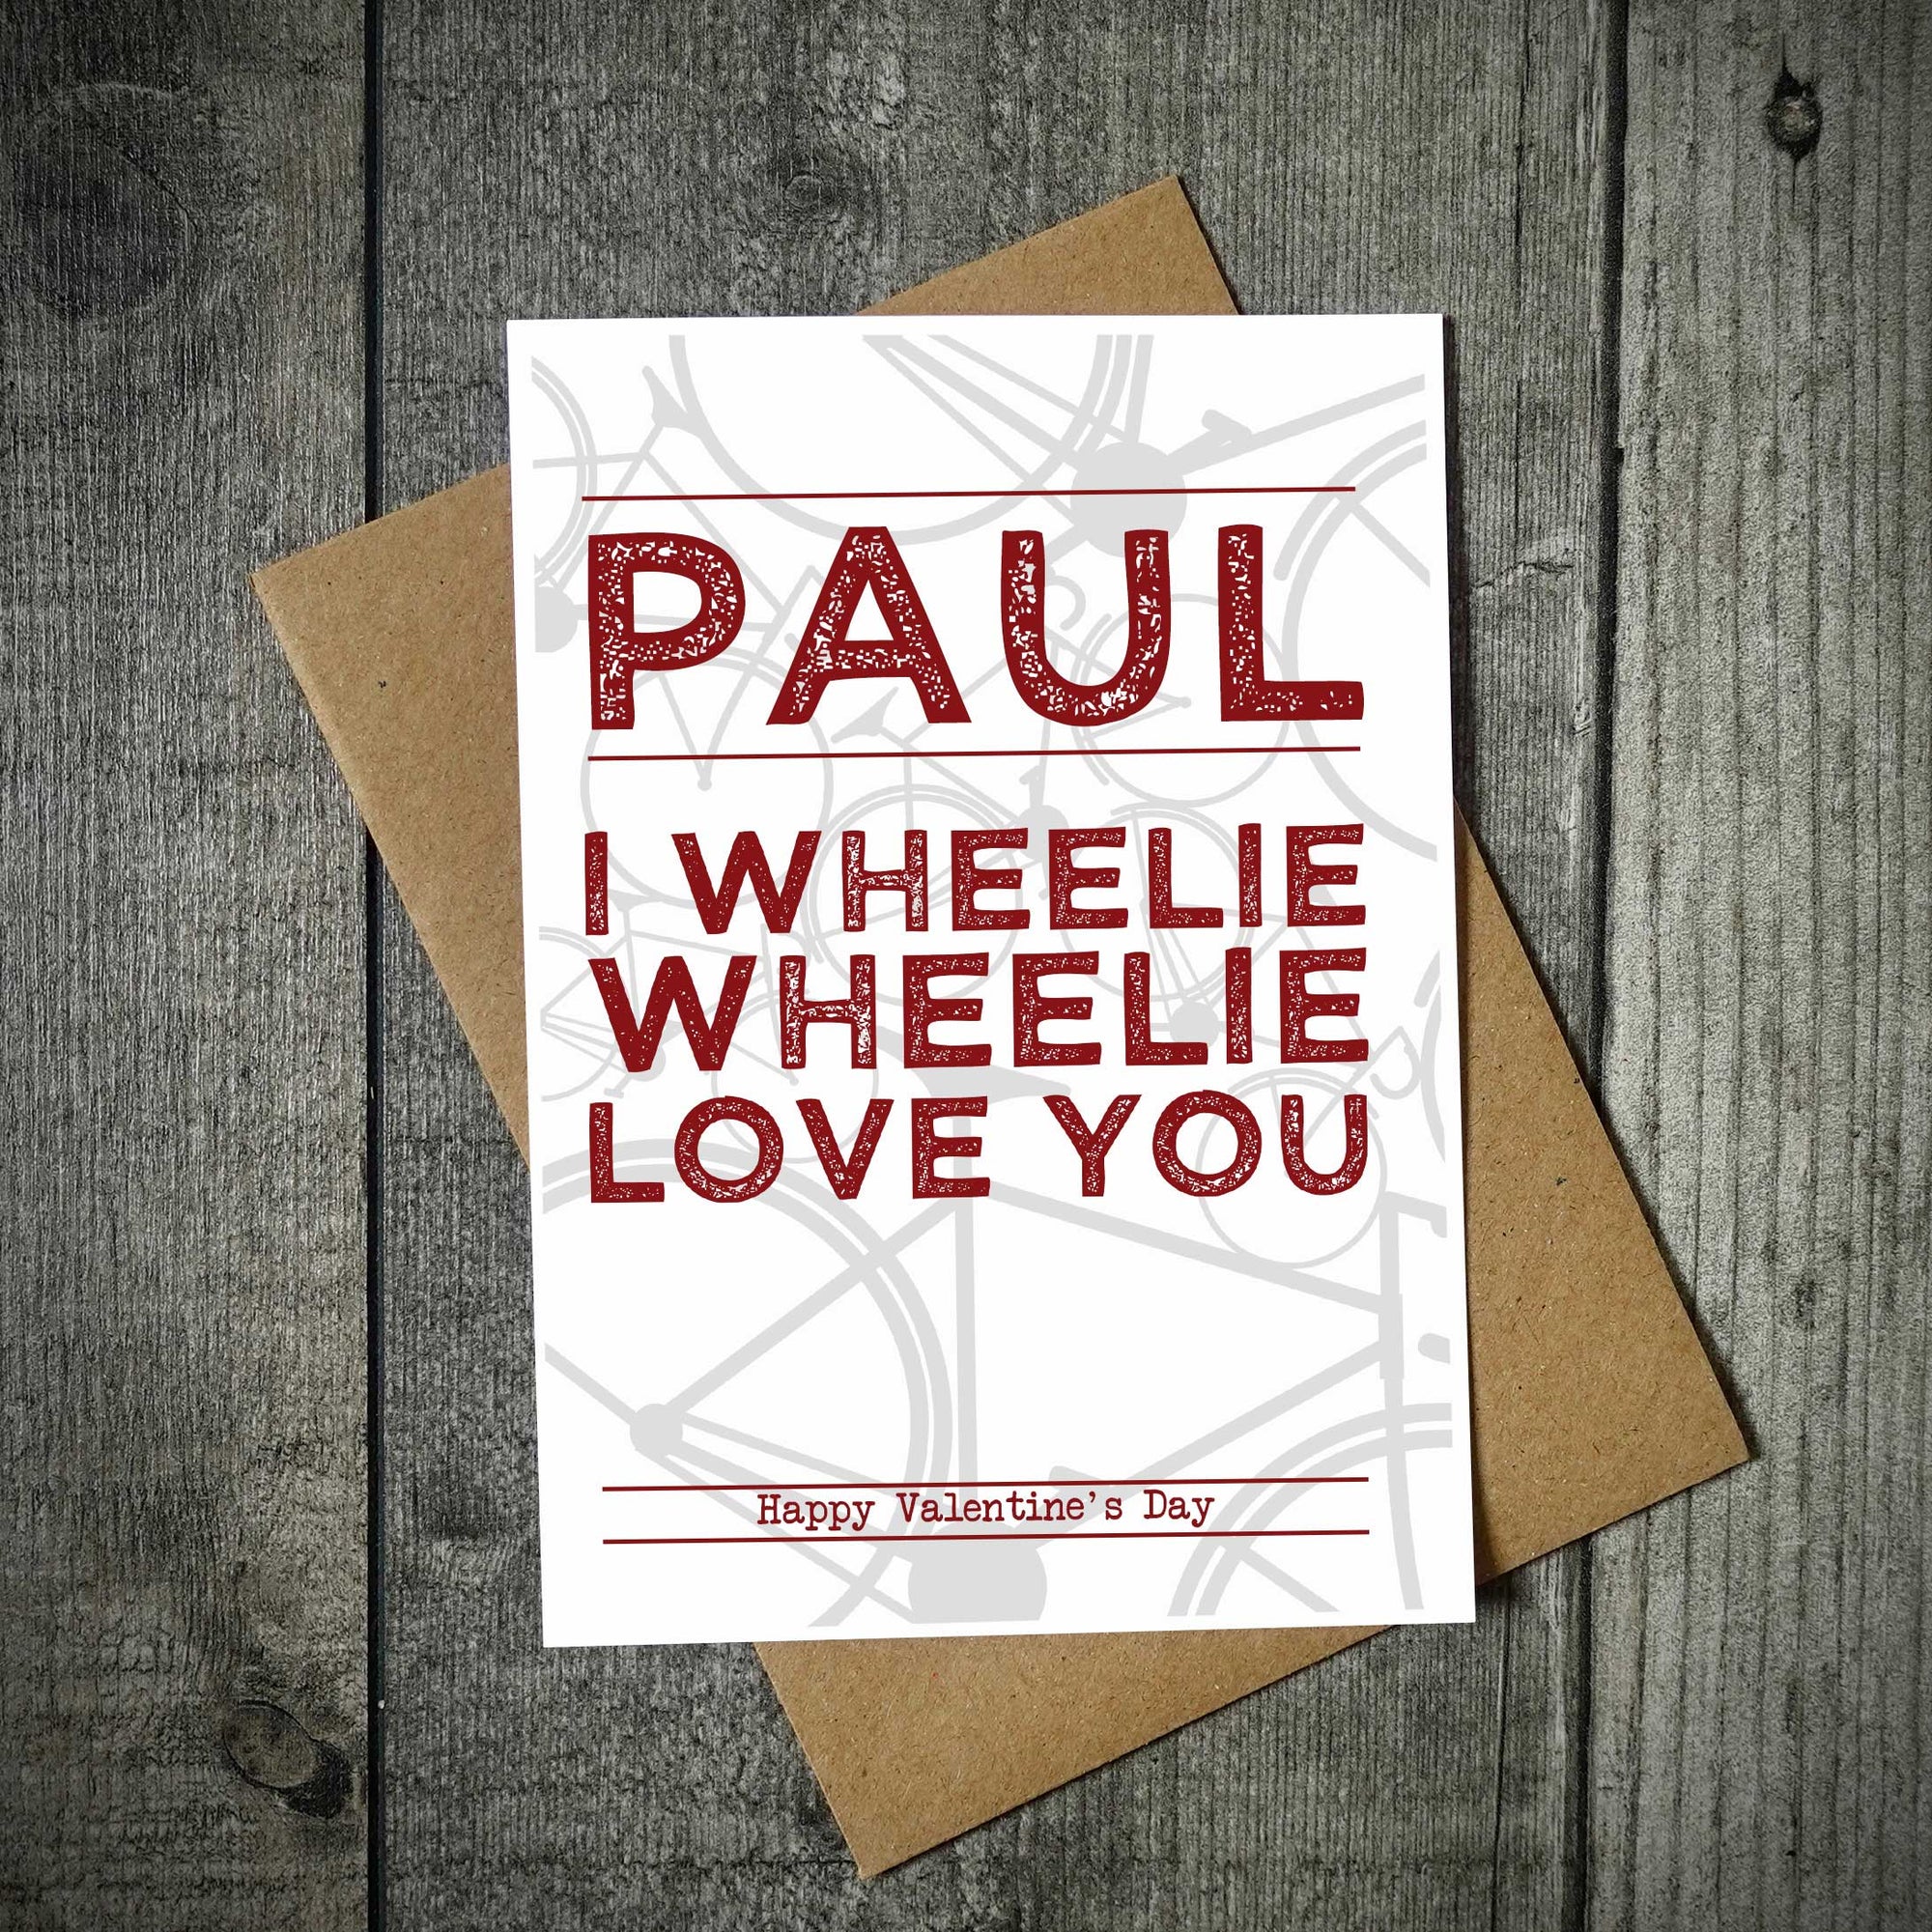 Personalised I Wheelie, Wheelie Love You - Bike Card